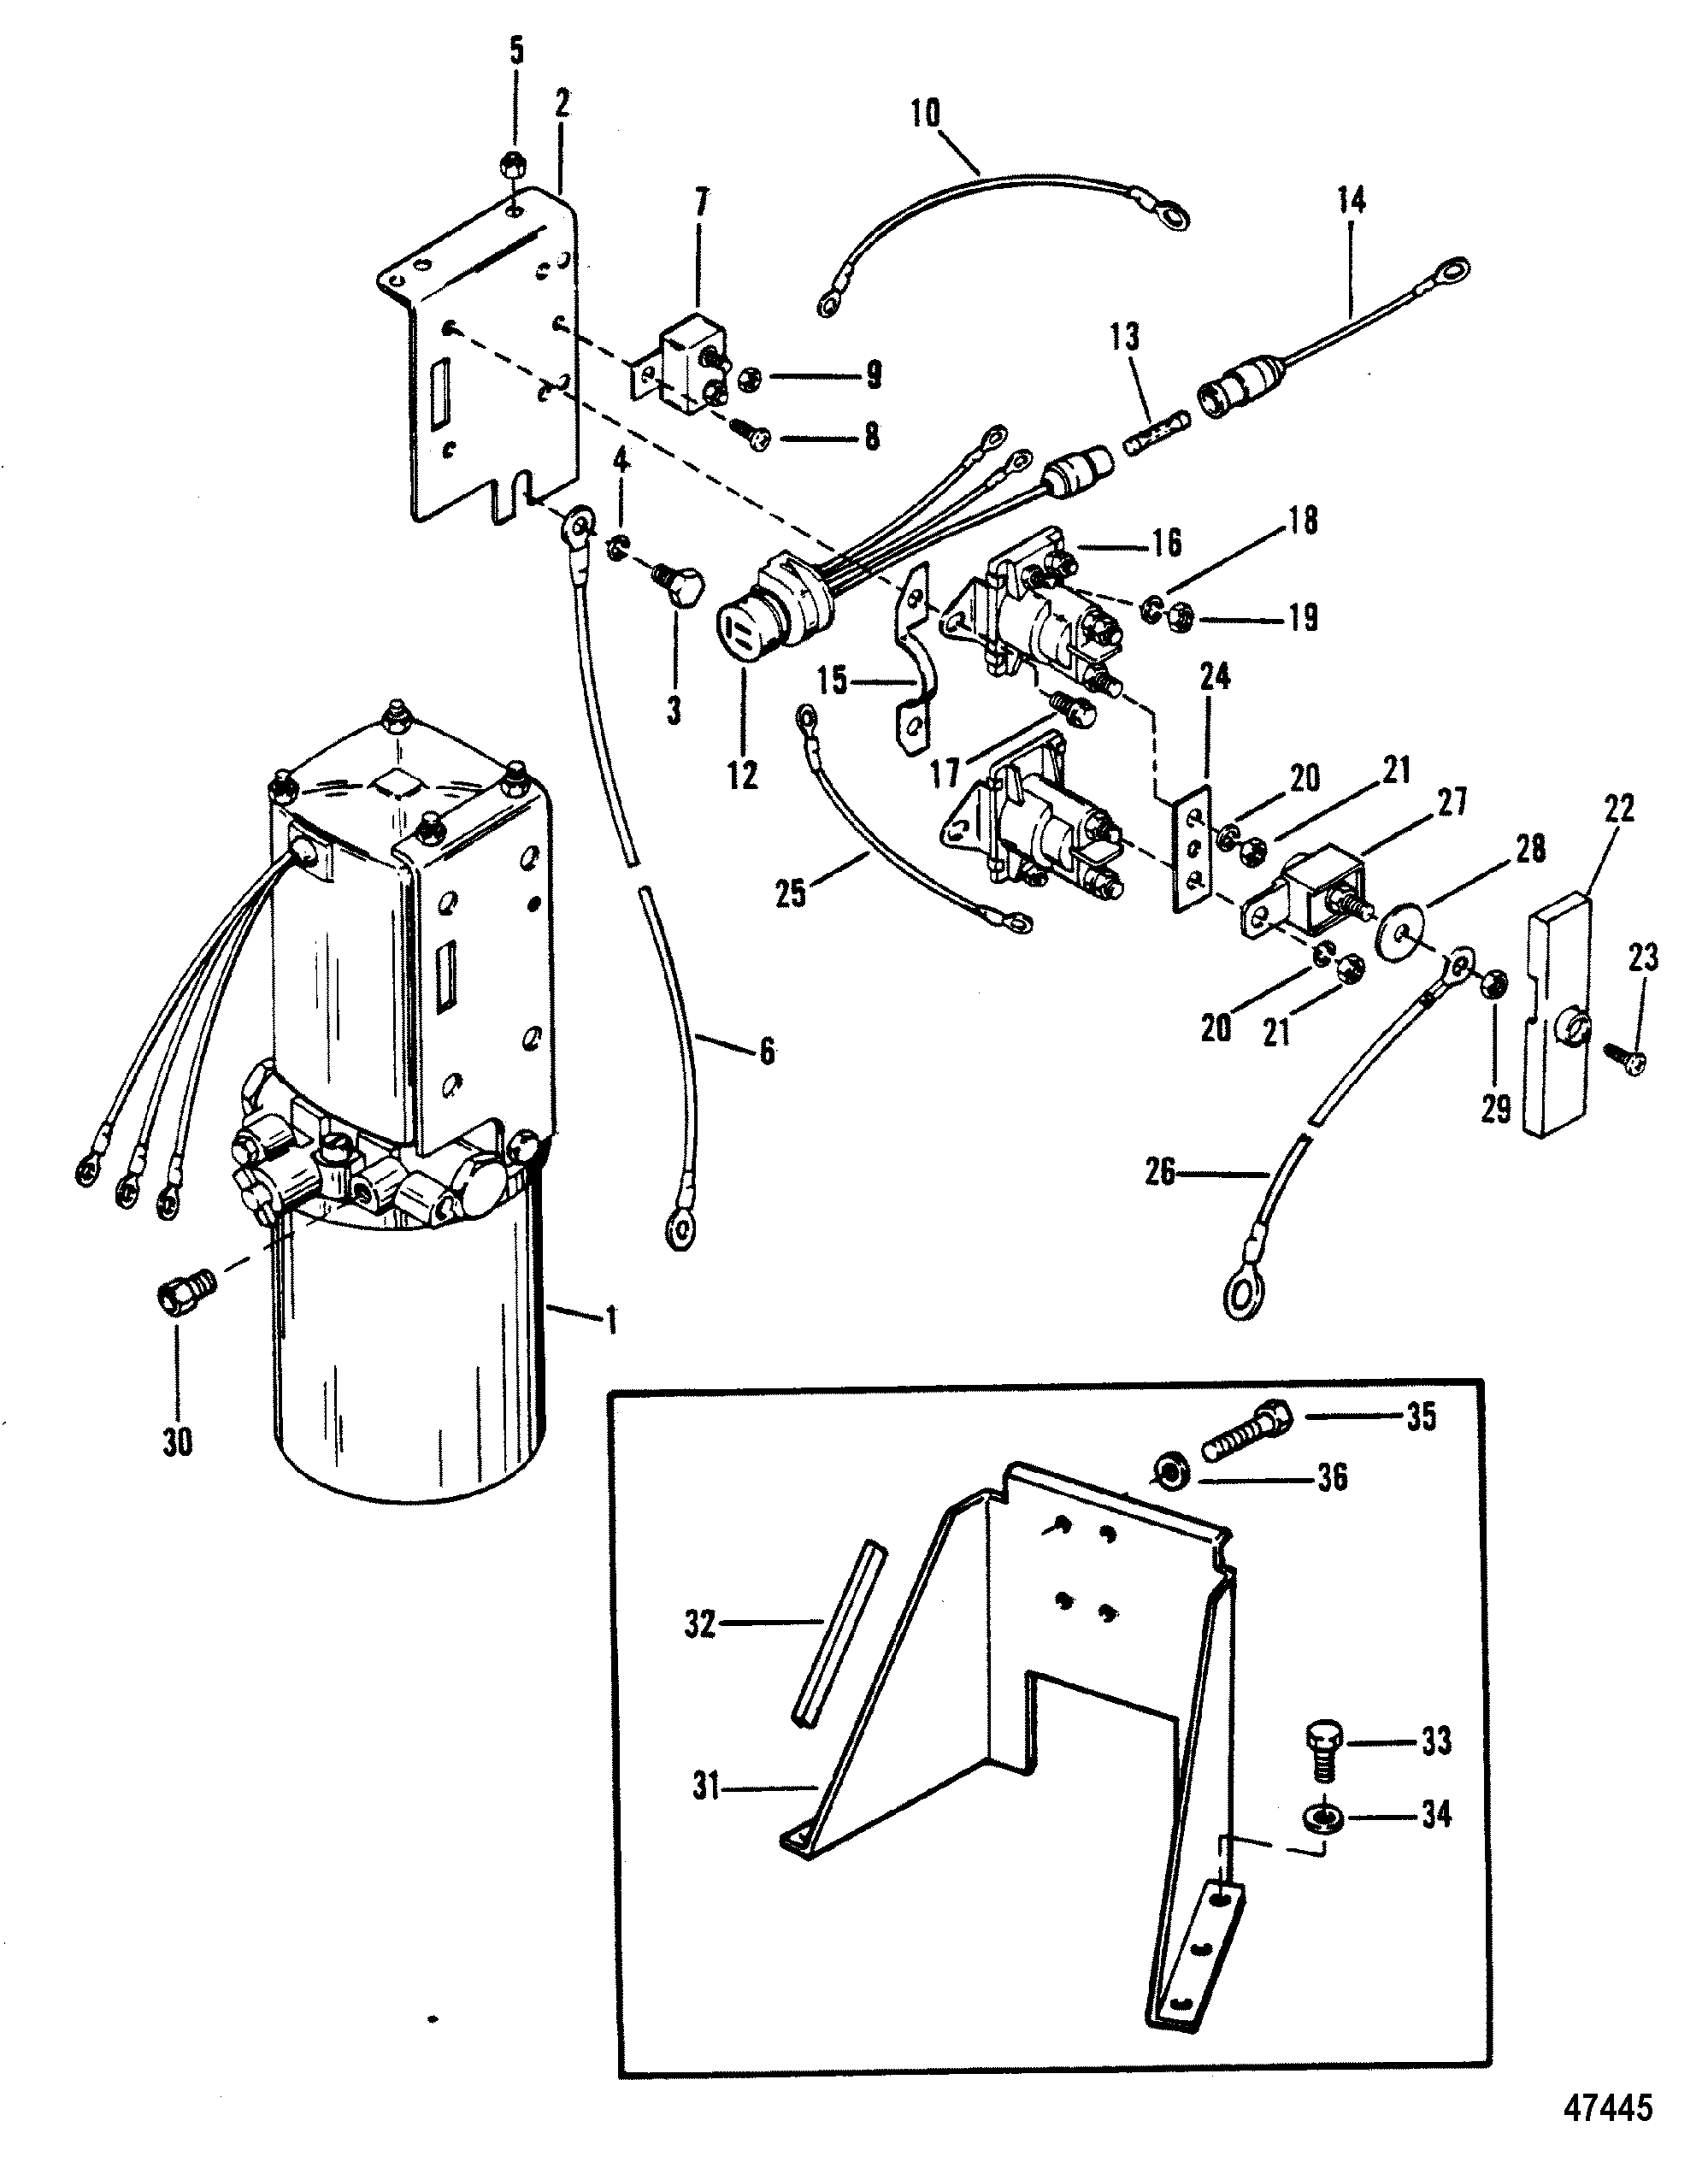 HYDRAULIC PUMP AND BRACKET(OILDYNE PUMP METAL RESERVOIR)